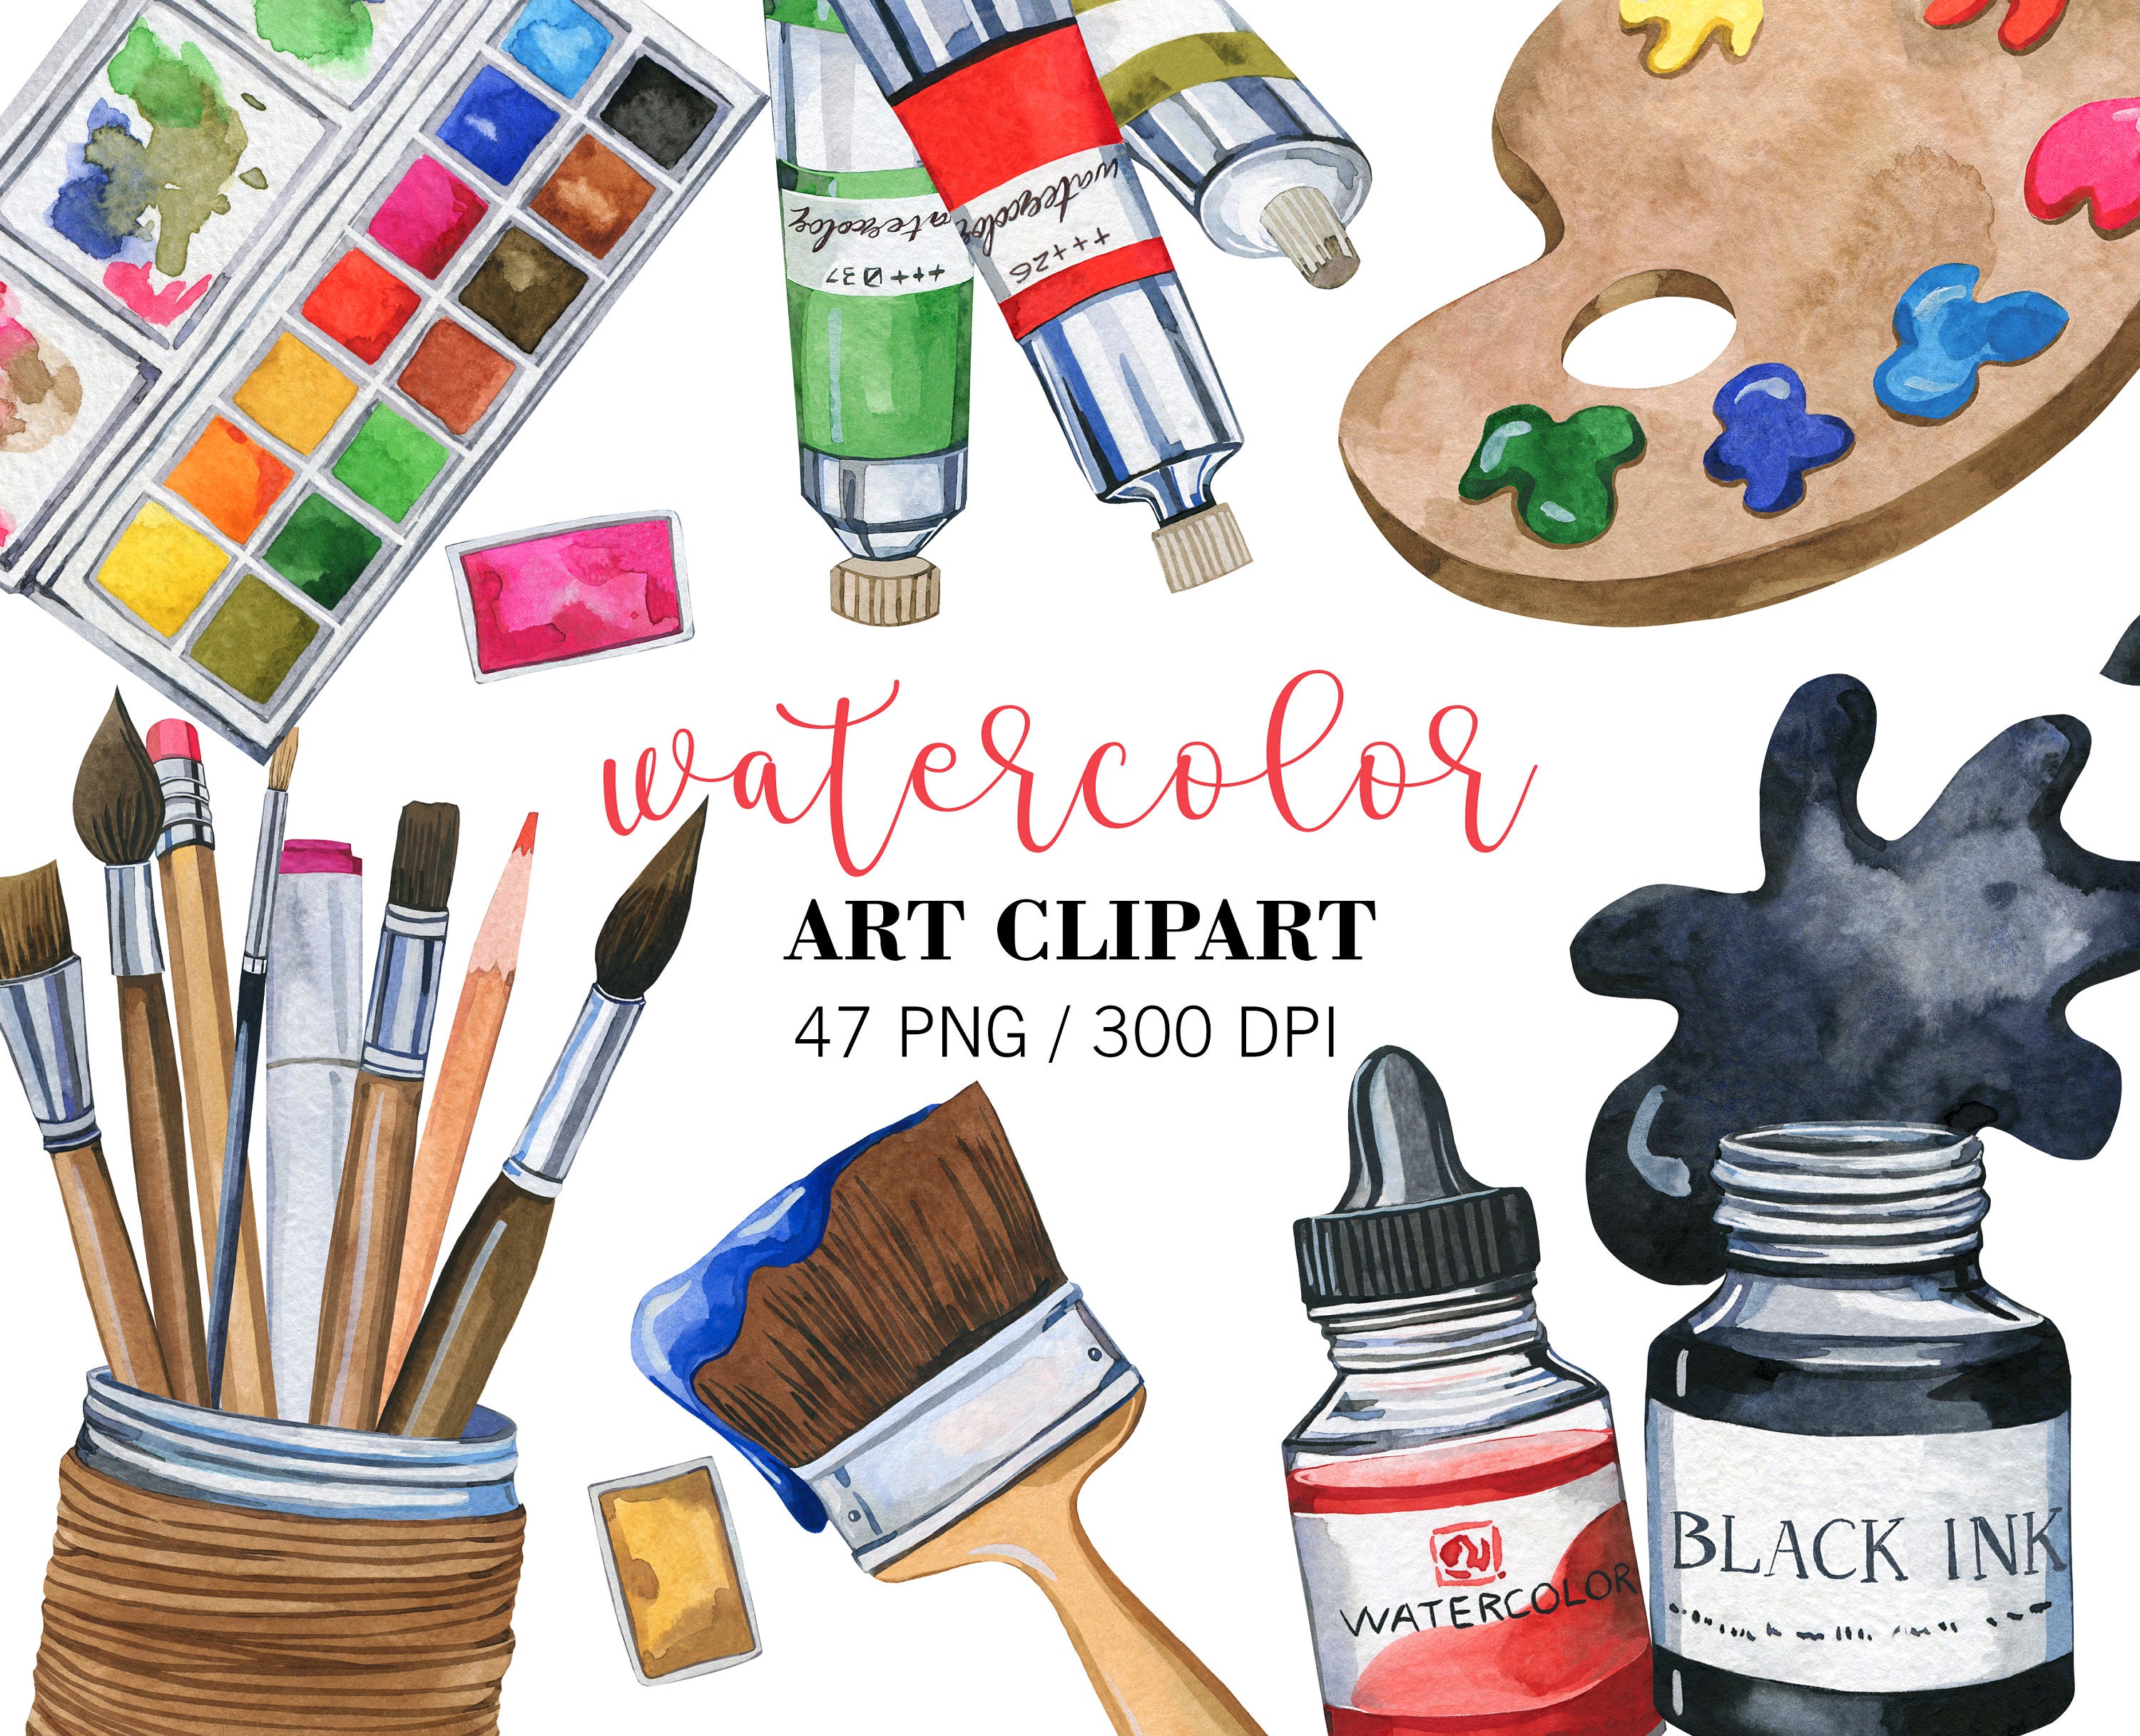 Craft Supplies Clipart Crafting Tools Clip Art Digital Downloads 